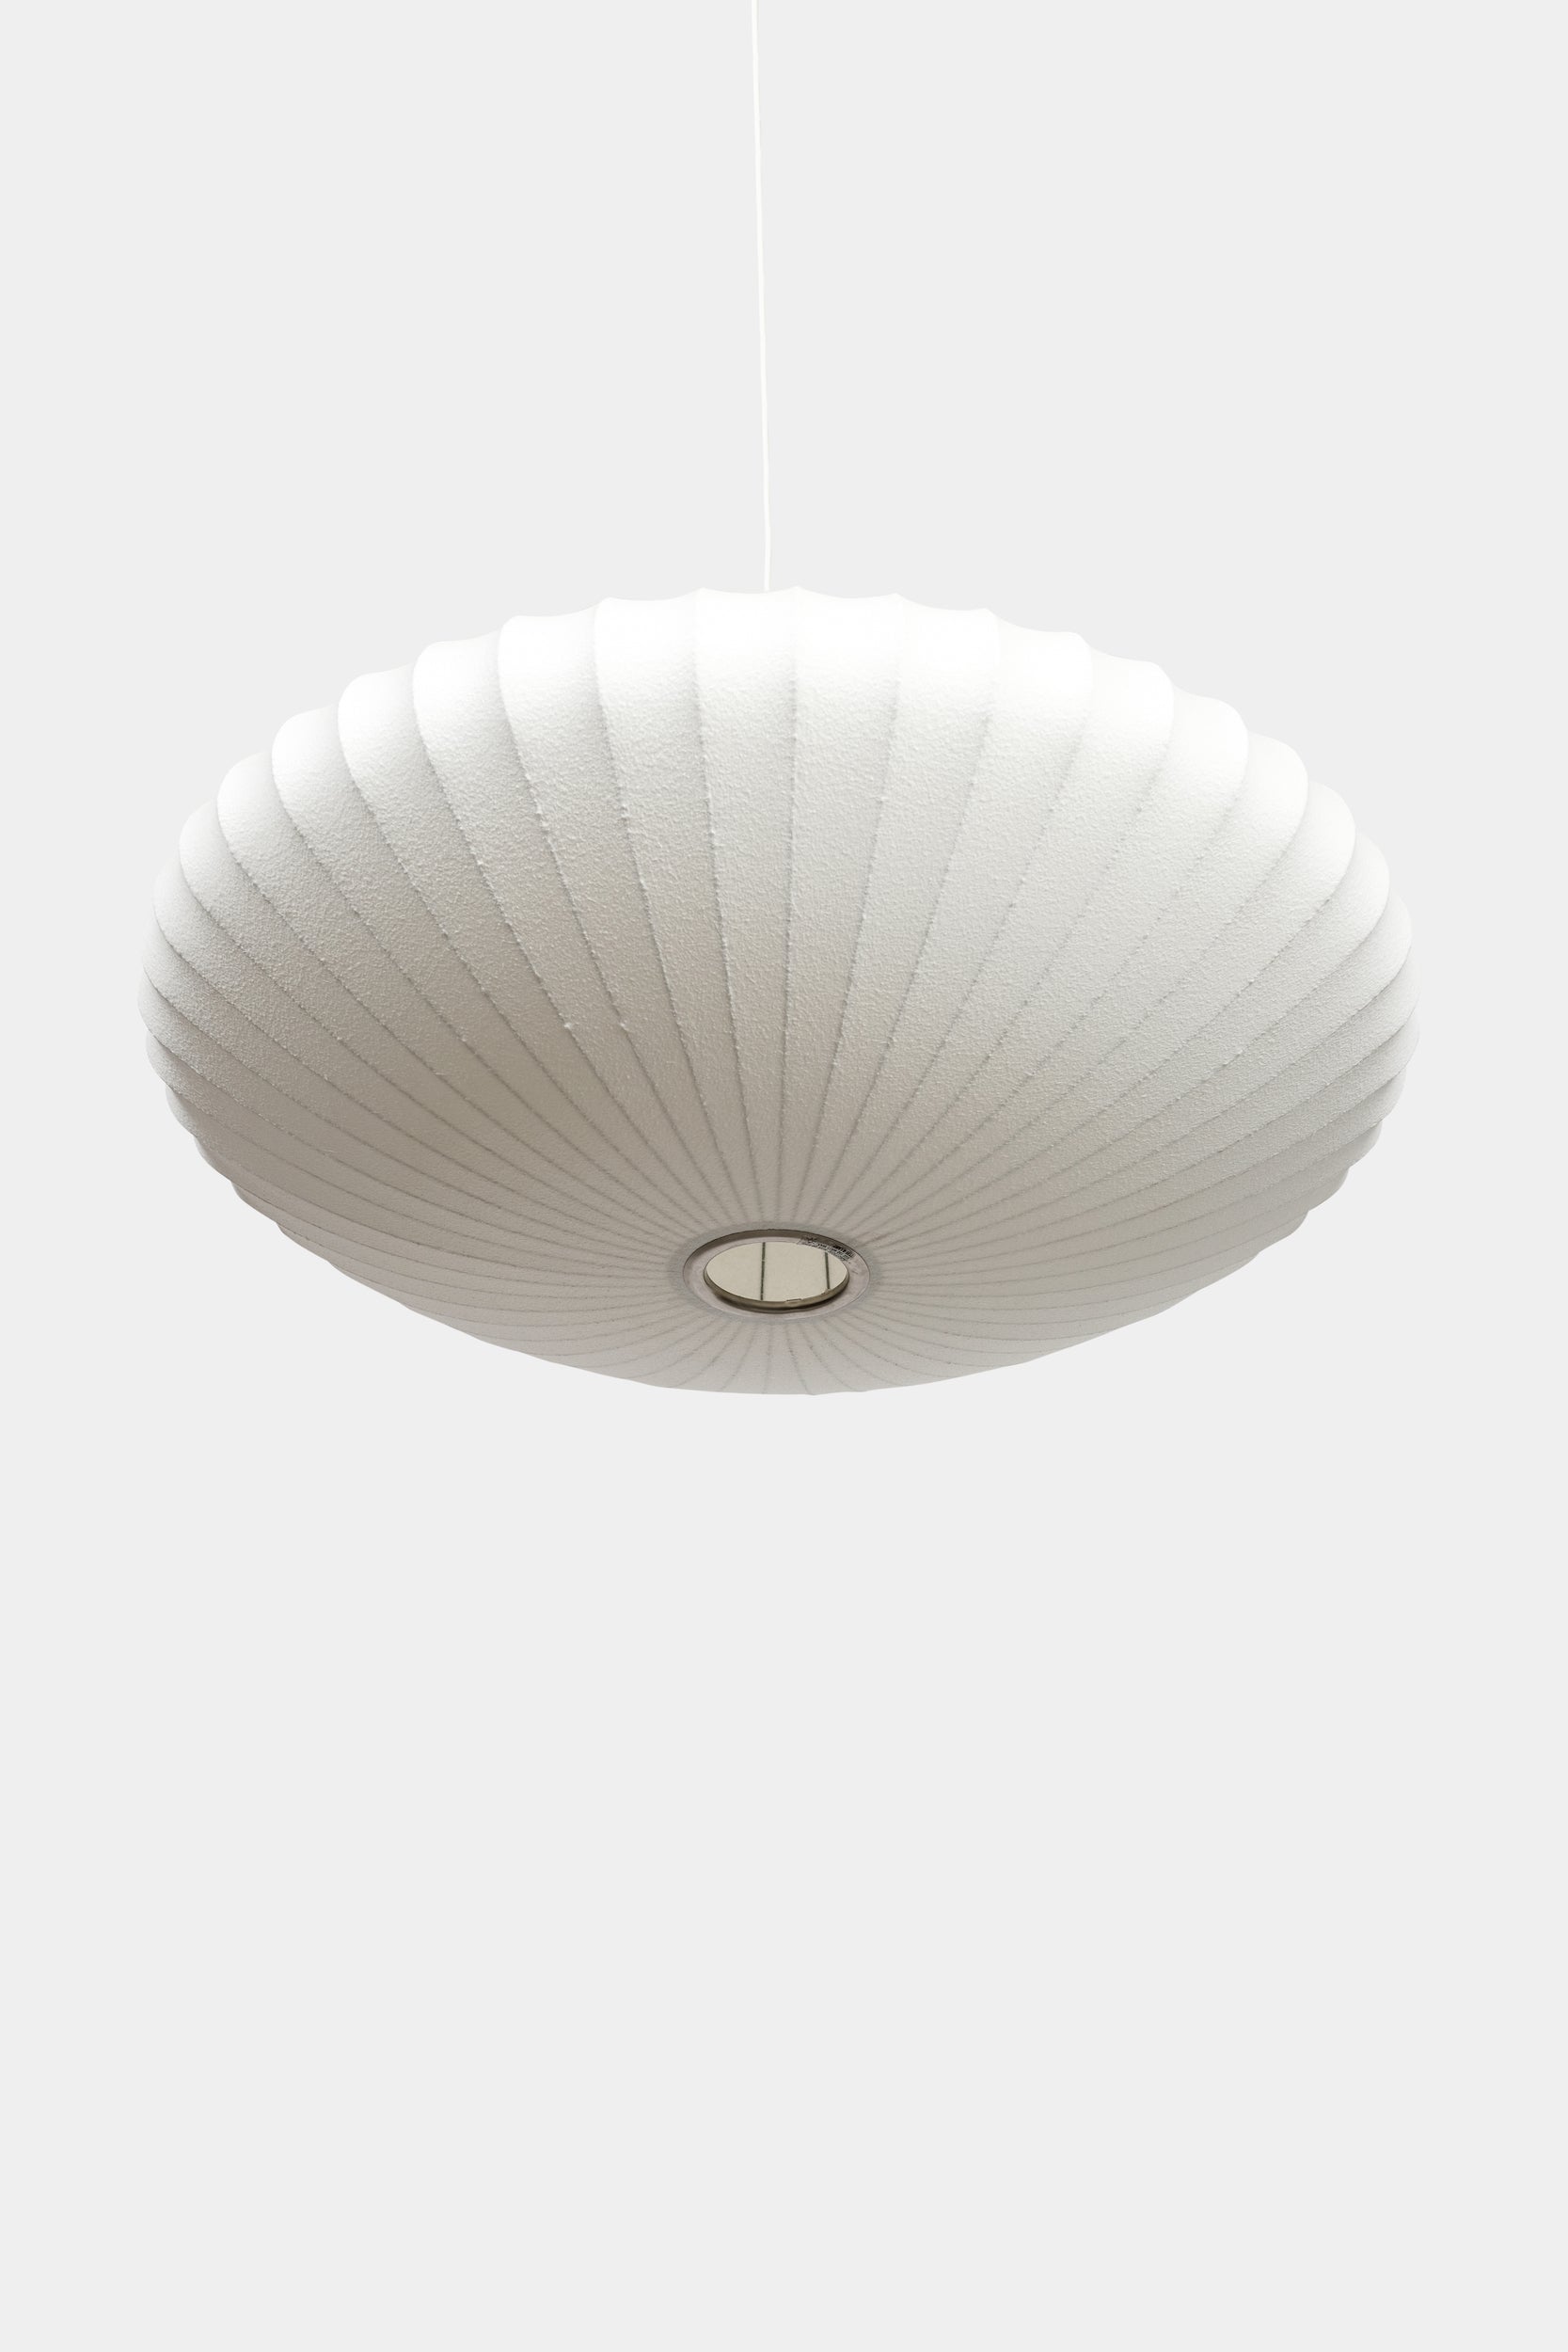 George Nelson Modernica Bubble Lamp® Saucer, 50er